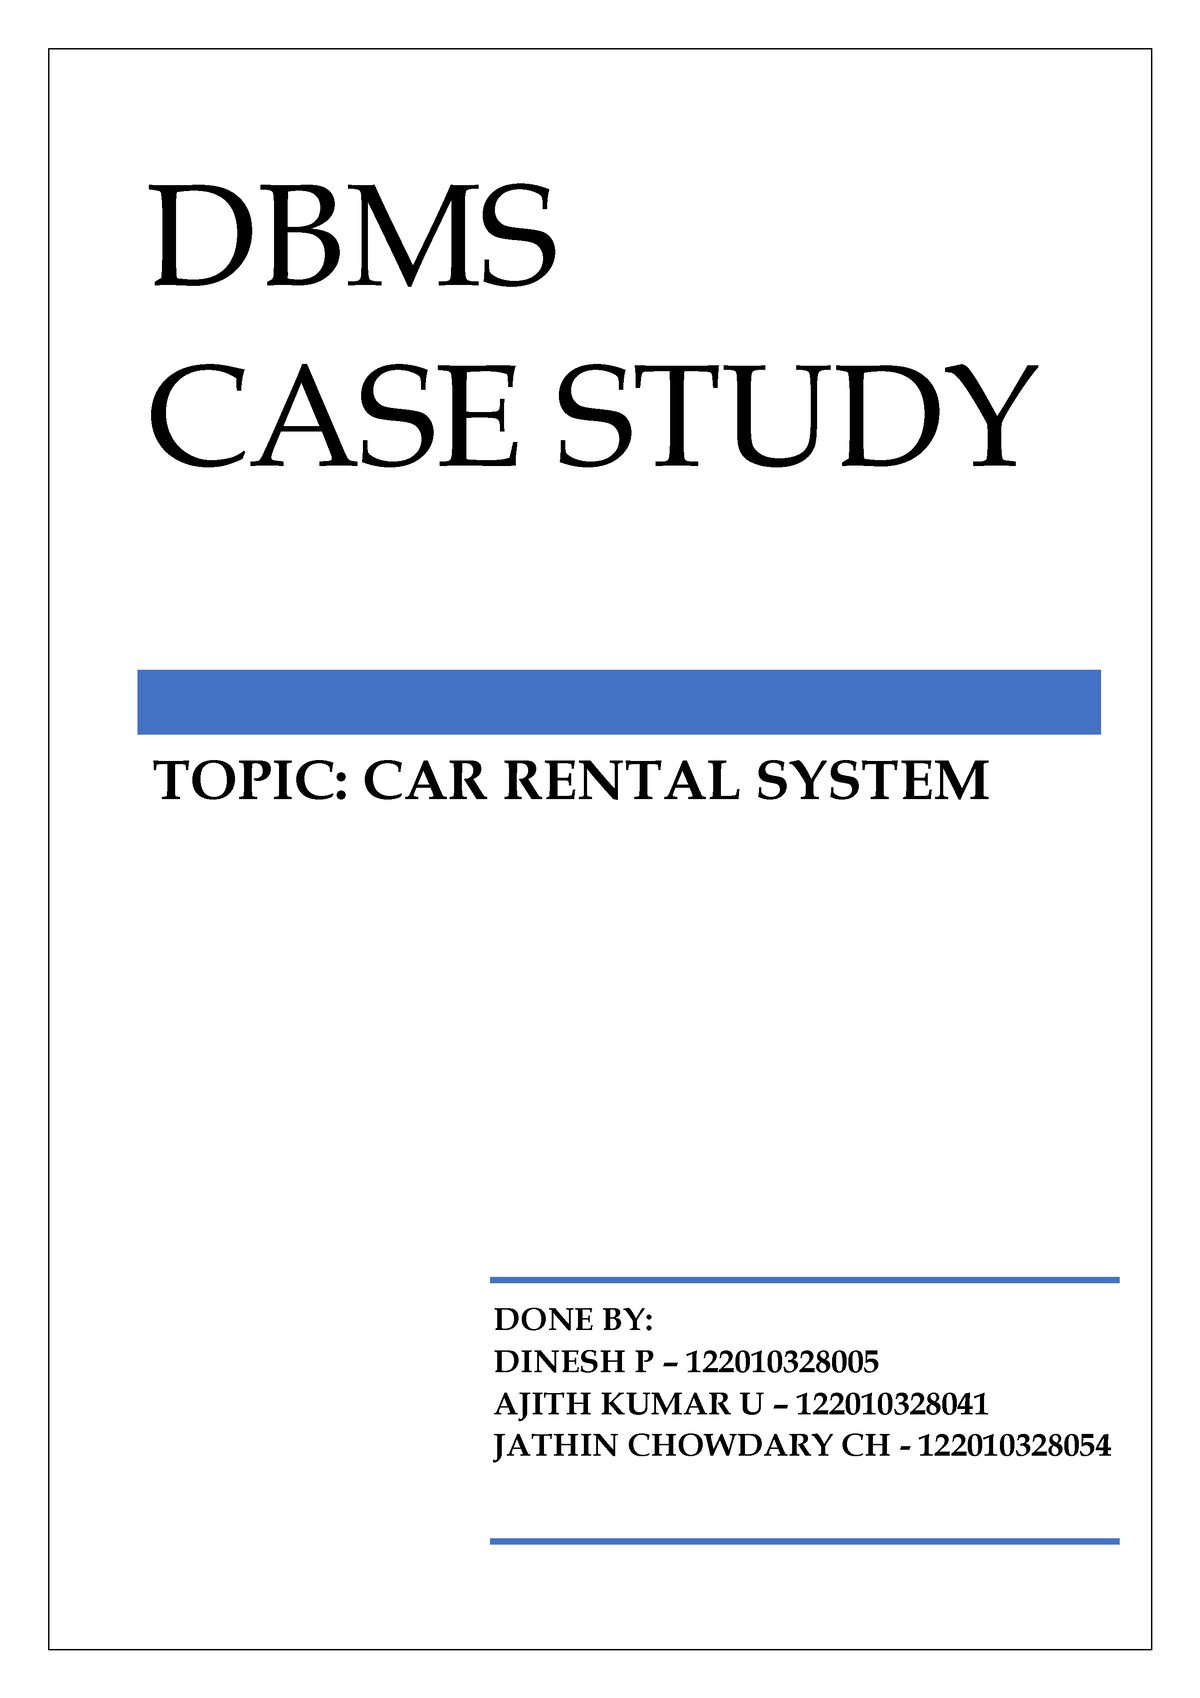 dbms case study topics pdf